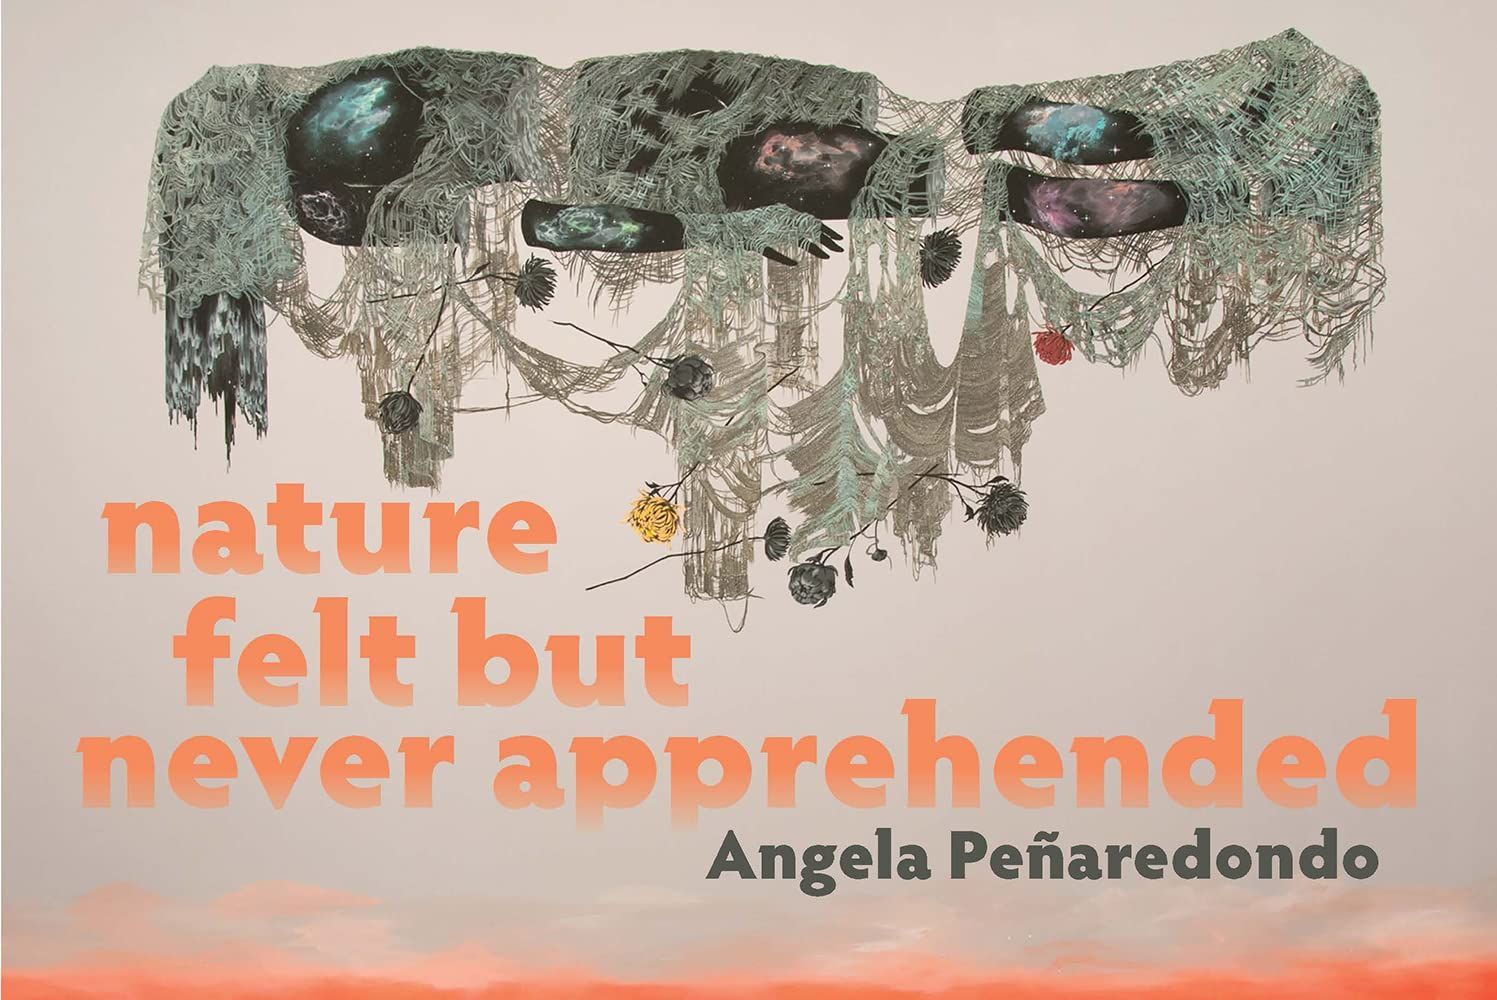 this tender gouge: On Angela Peñaredondo’s “nature felt but never apprehended”